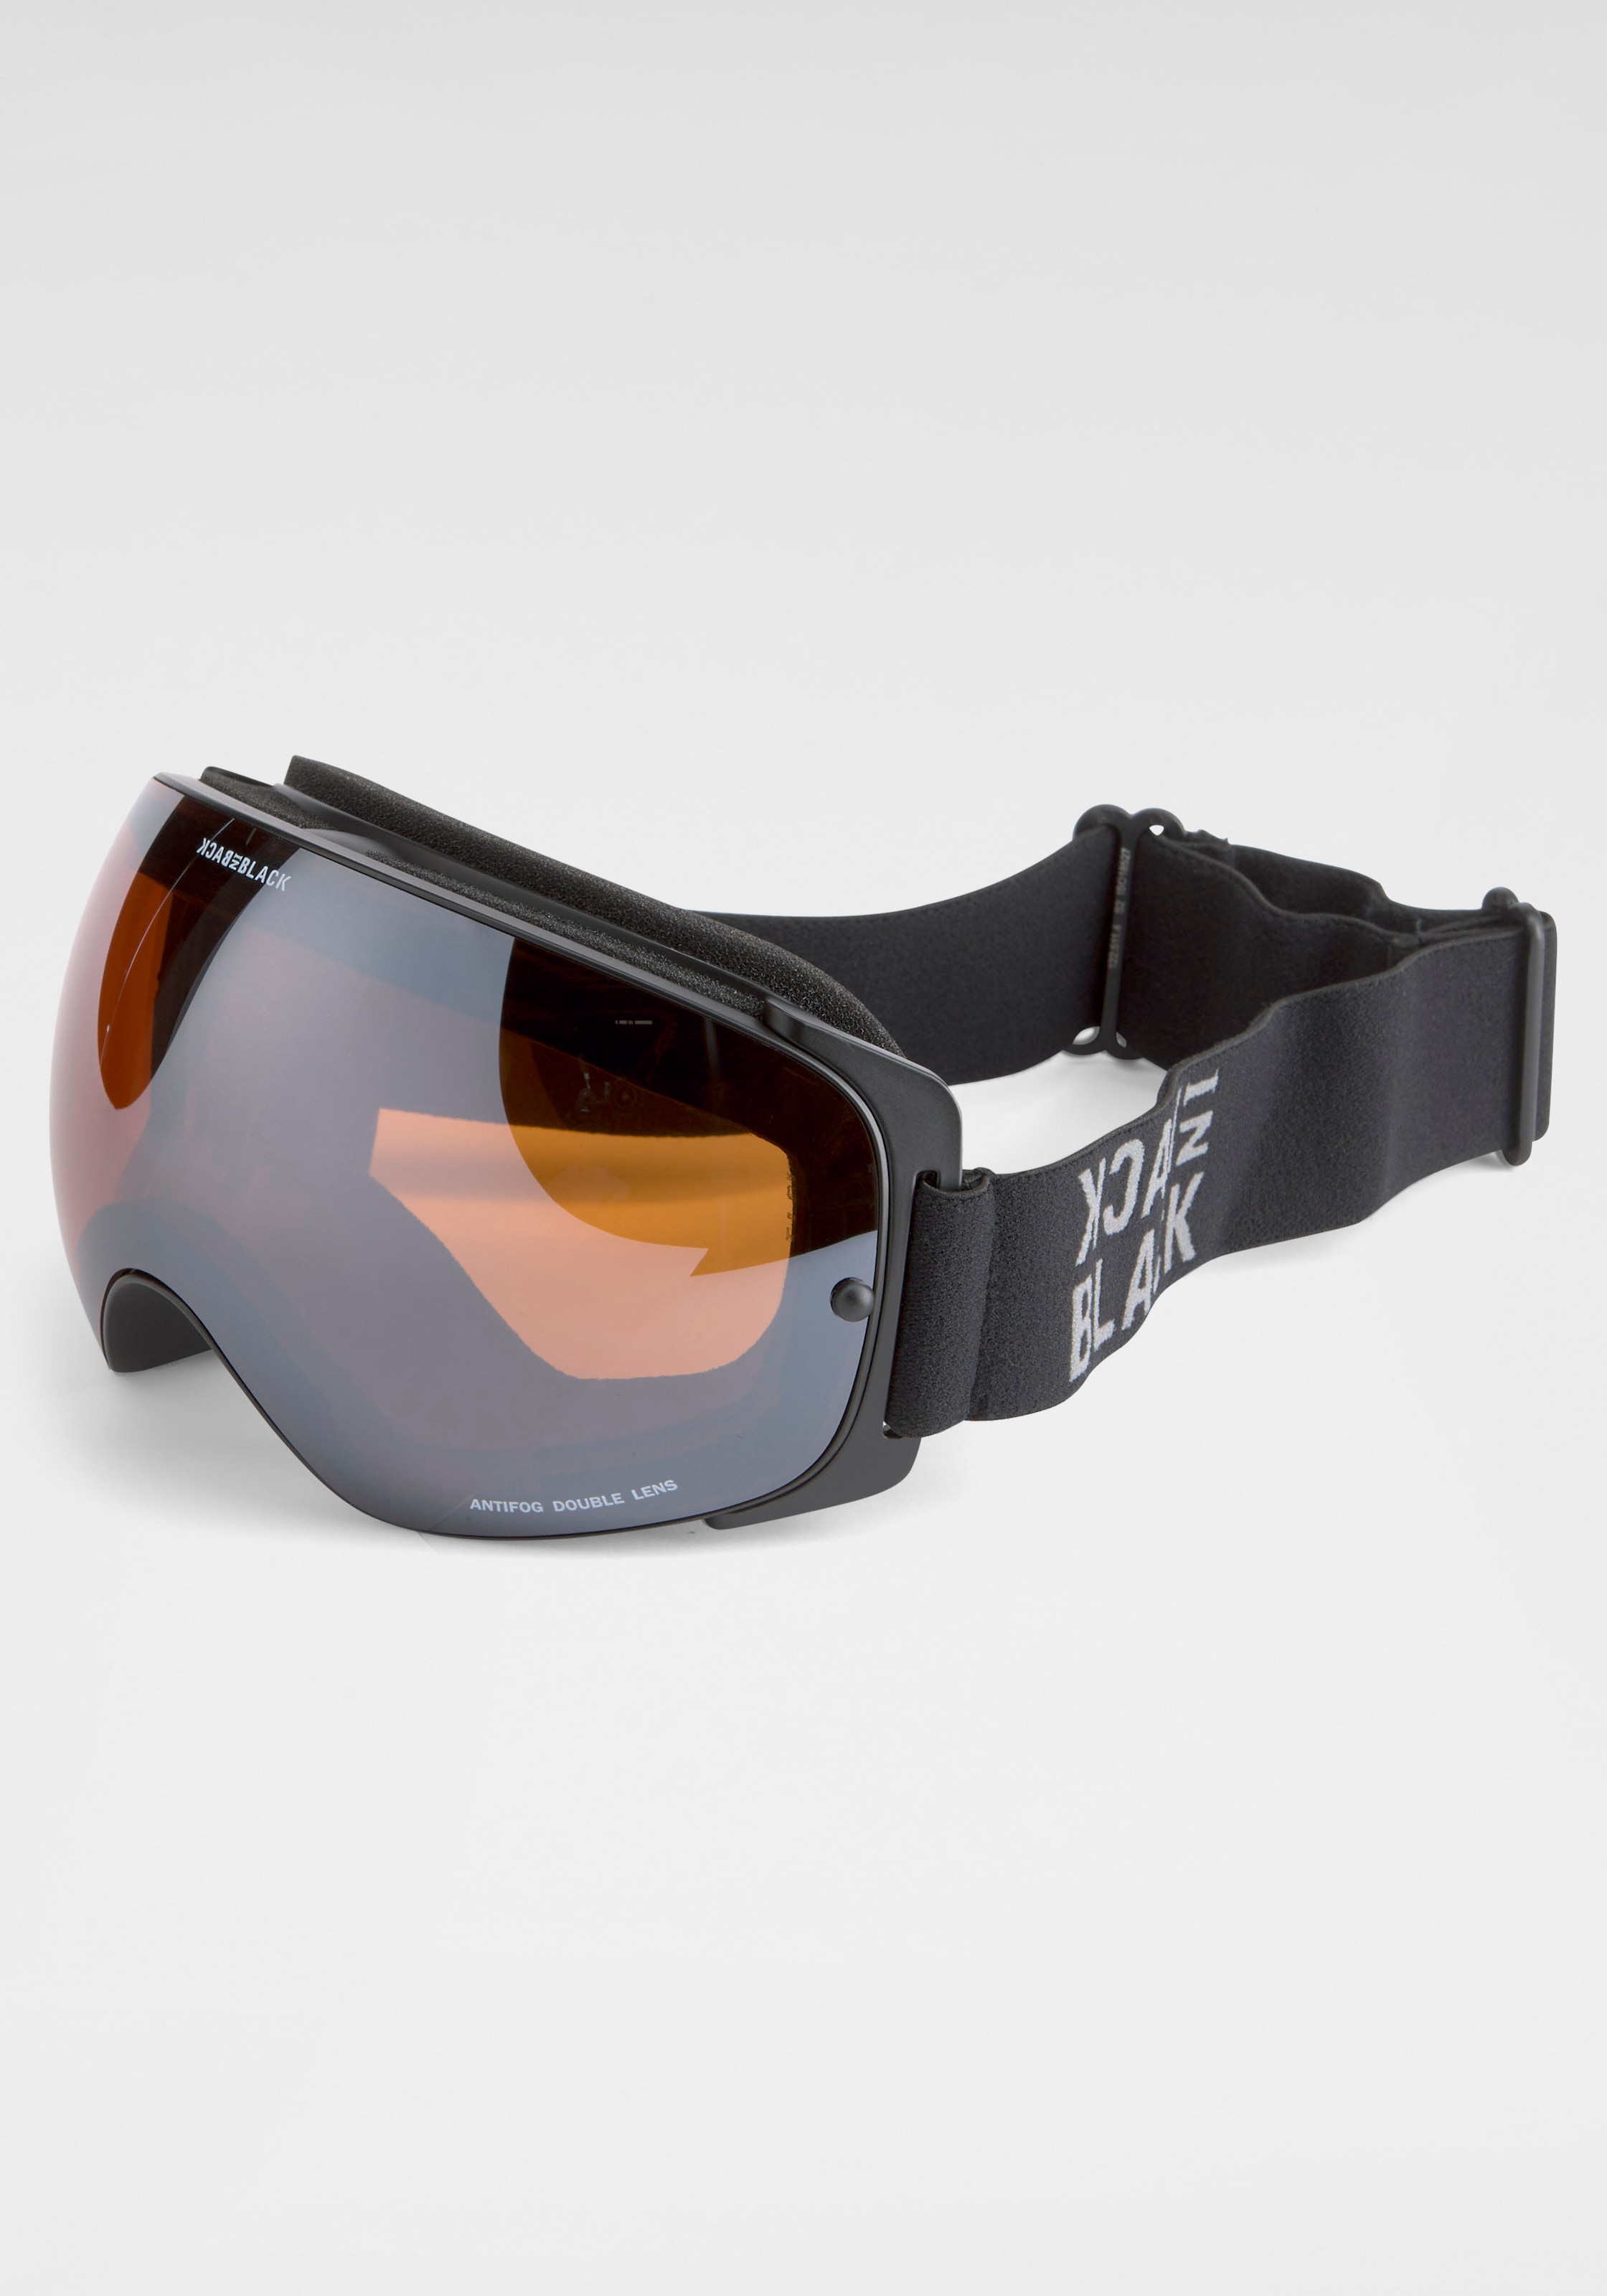 BACK IN BLACK Eyewear 99 CHF Skibrille, Antifog bestellen ab double versandkostenfrei Lens